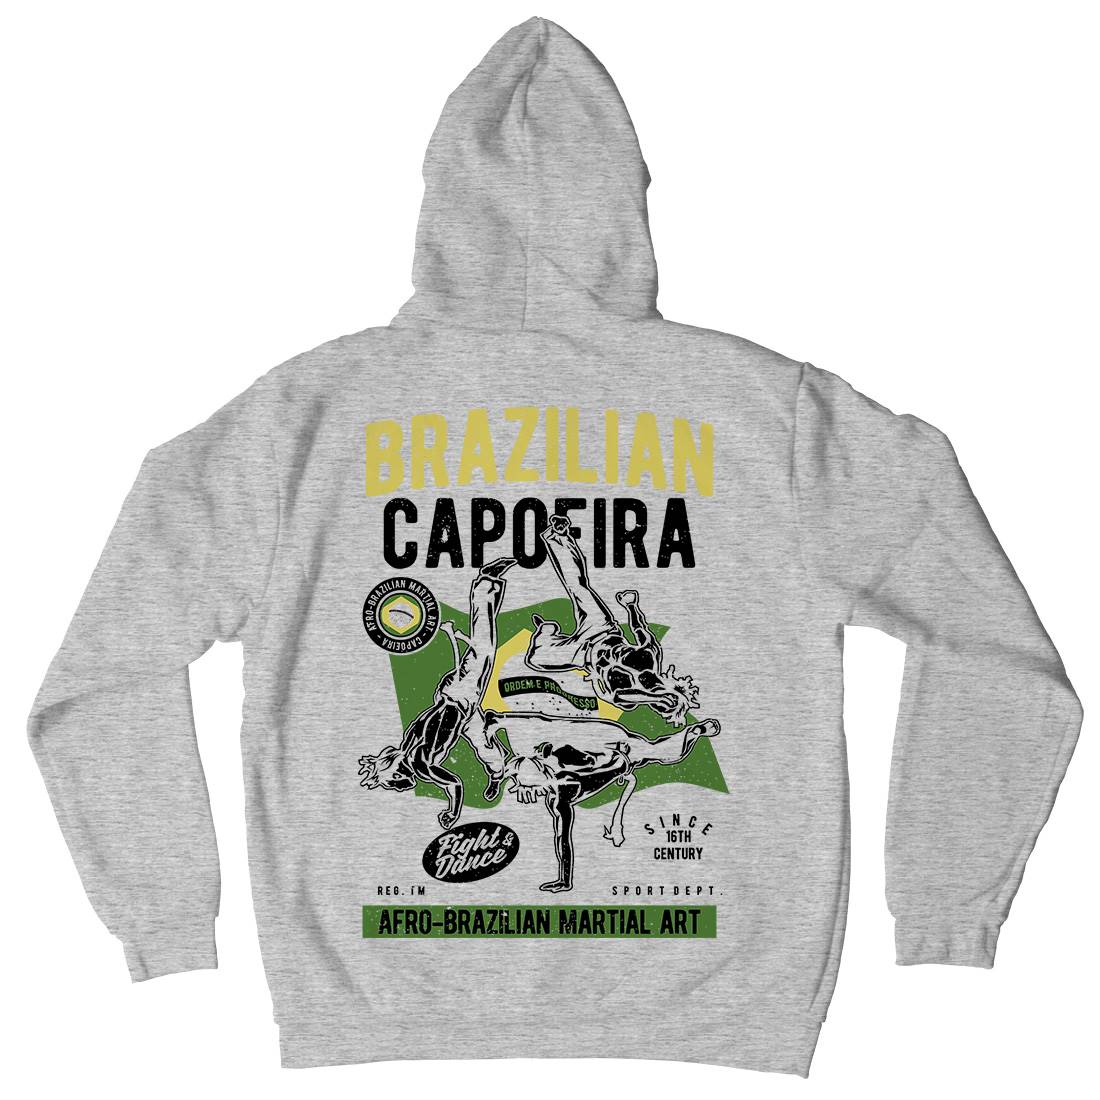 Brazilian Capoeira Mens Hoodie With Pocket Sport A626